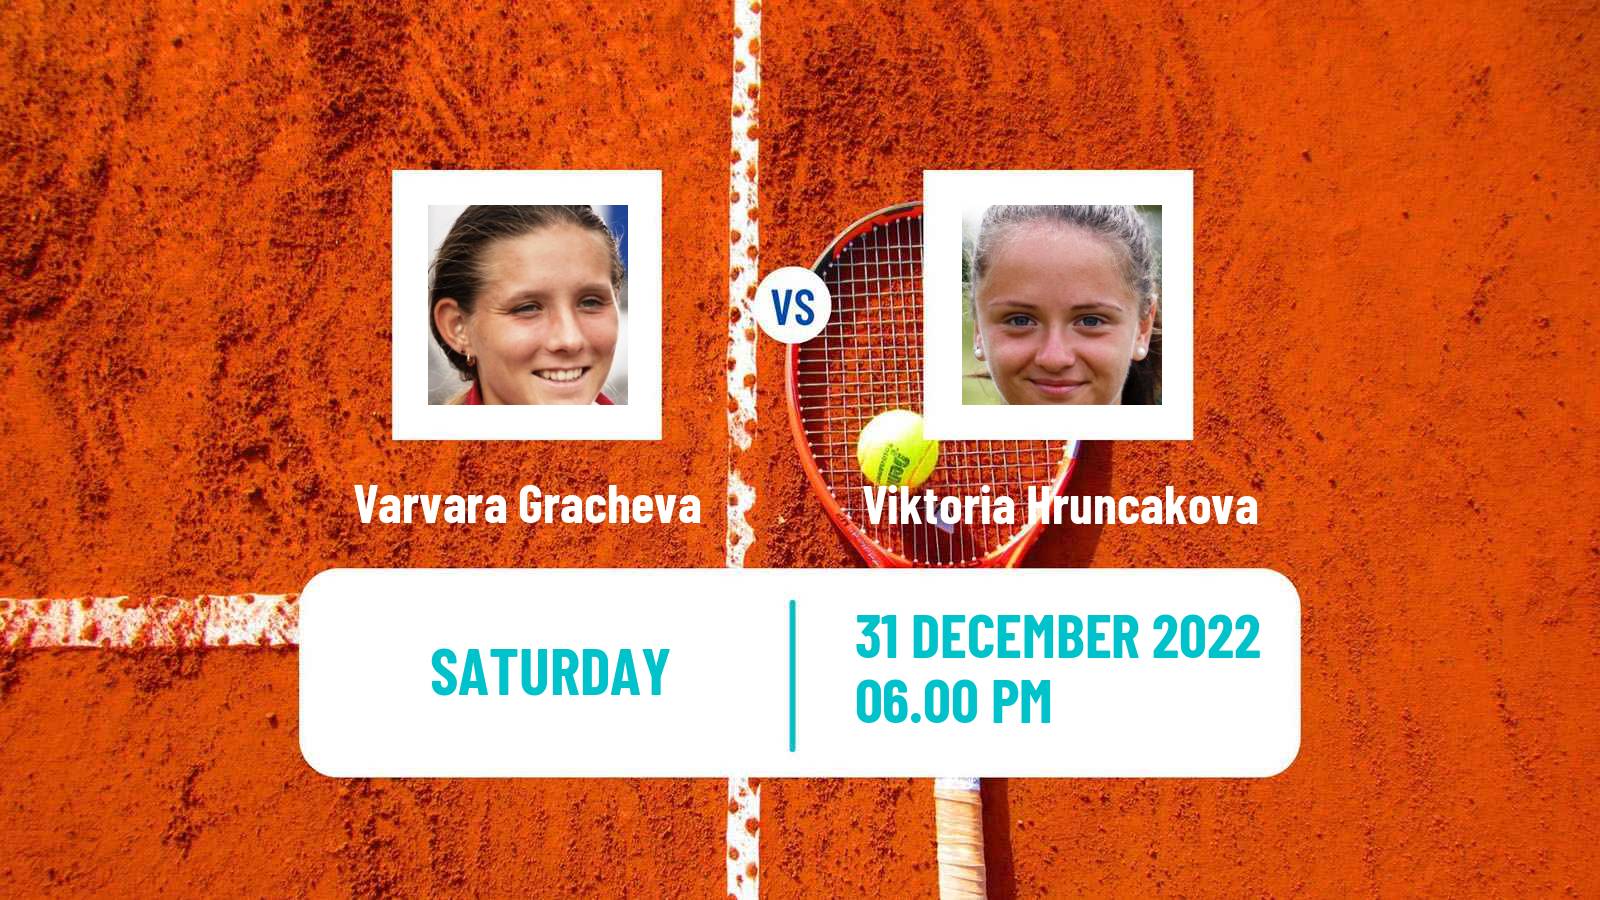 Tennis WTA Auckland Varvara Gracheva - Viktoria Hruncakova